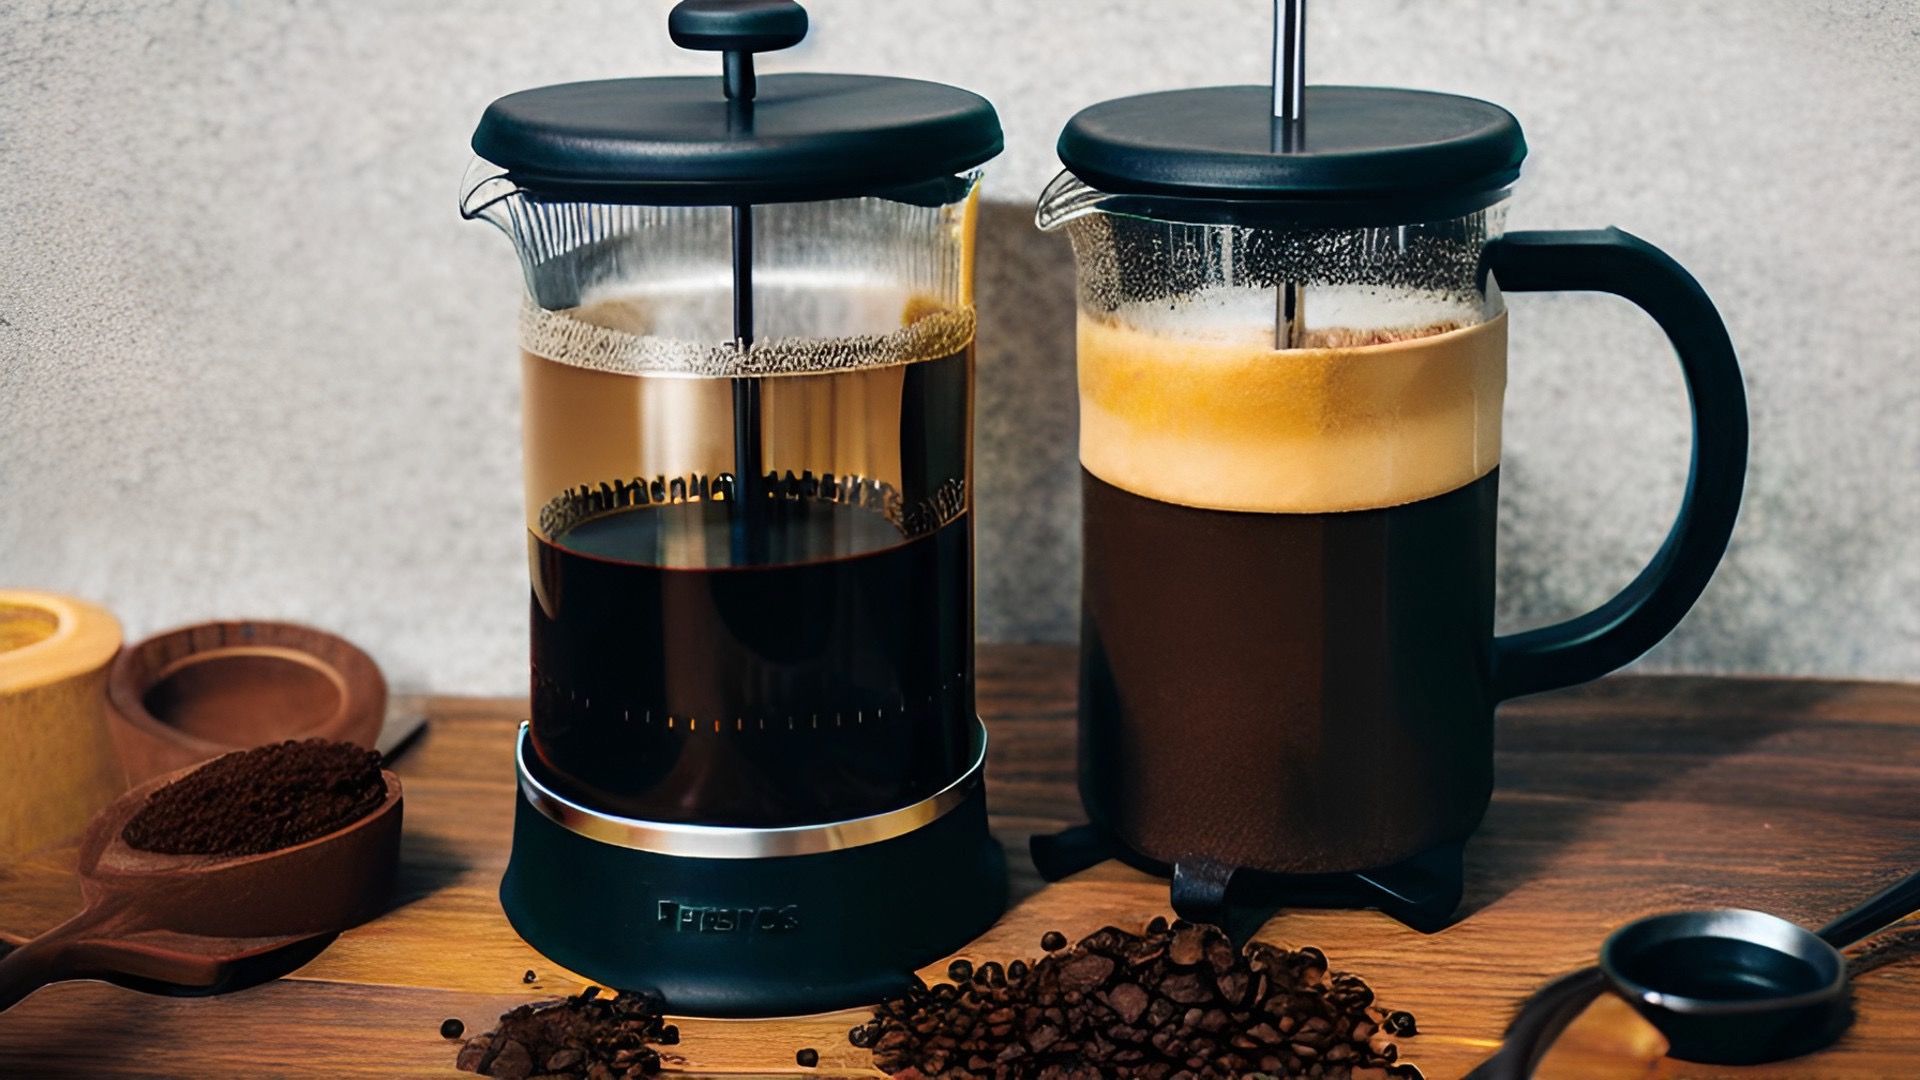  Bodum Brazil French Press Coffee Maker, 1.5 Liter, 51 Ounce,  Black: Home & Kitchen